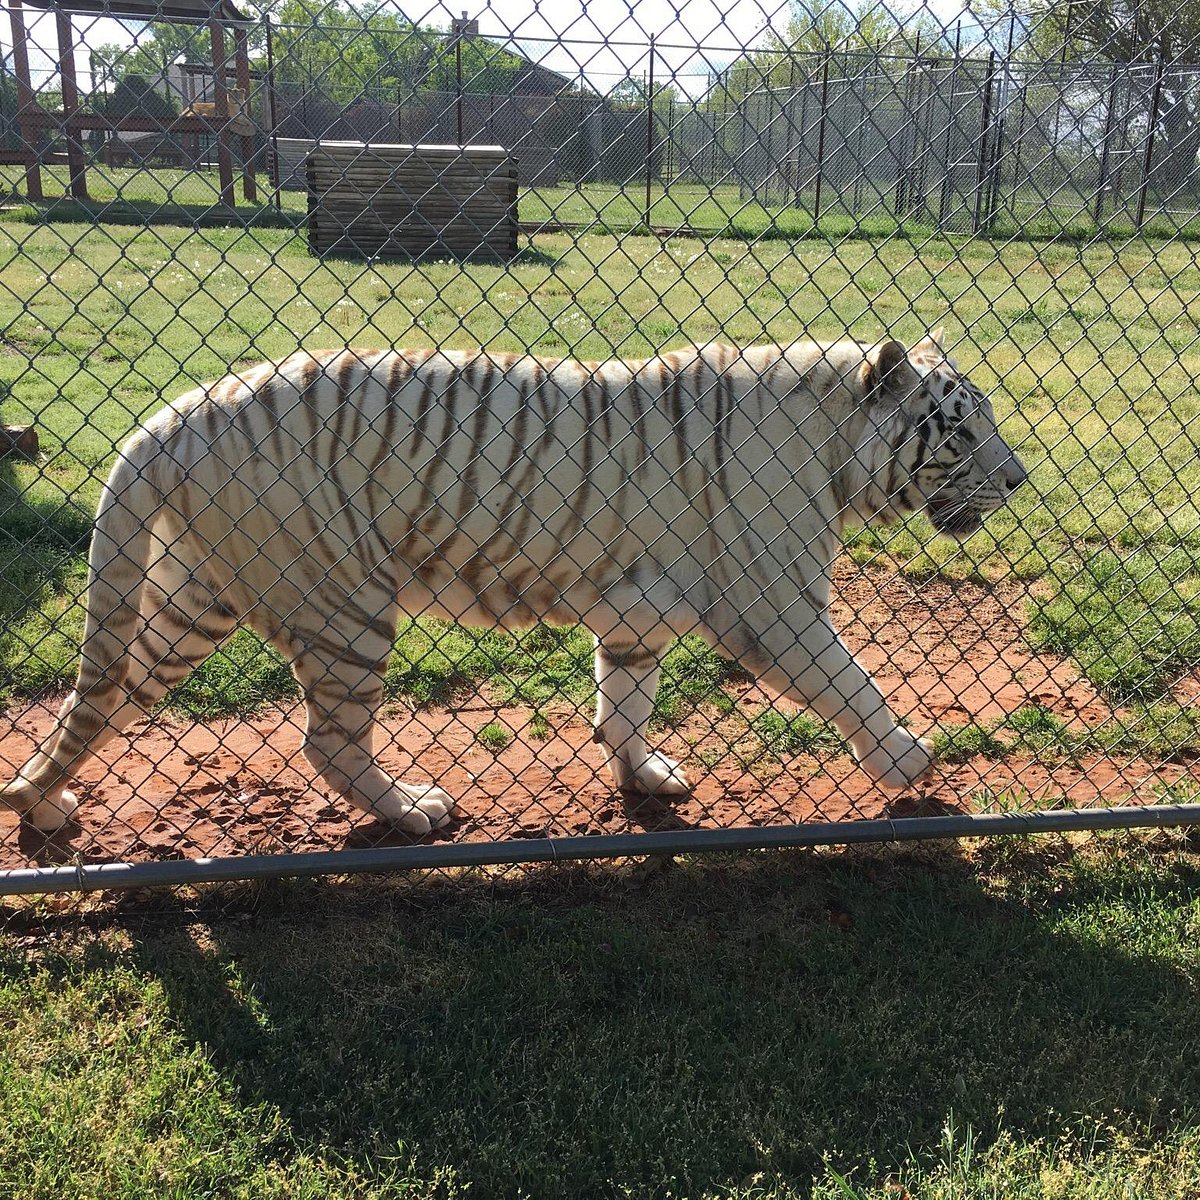 tiger safari zoological park reviews